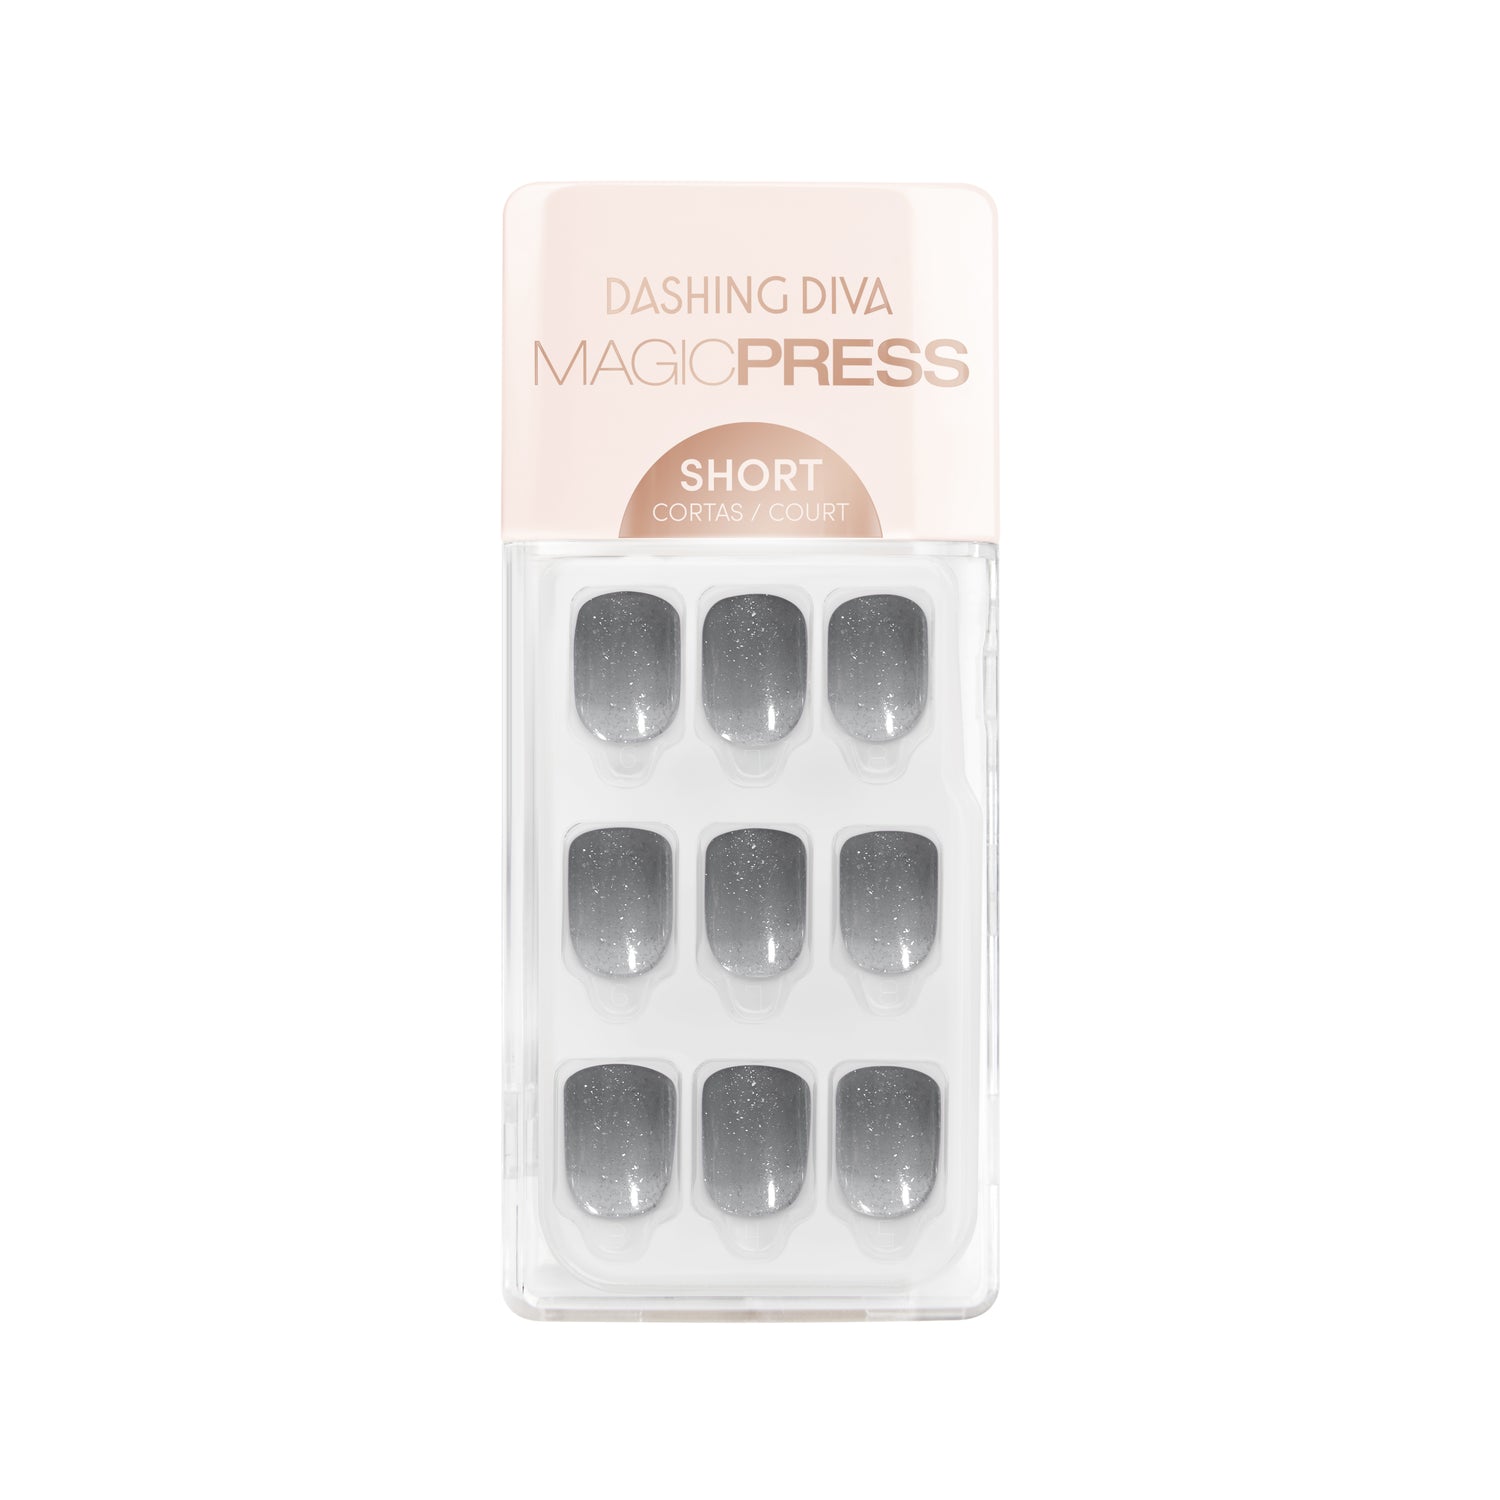 Dashing Diva MAGIC PRESS short, square dark grey press on gel nails with shimmer finish.